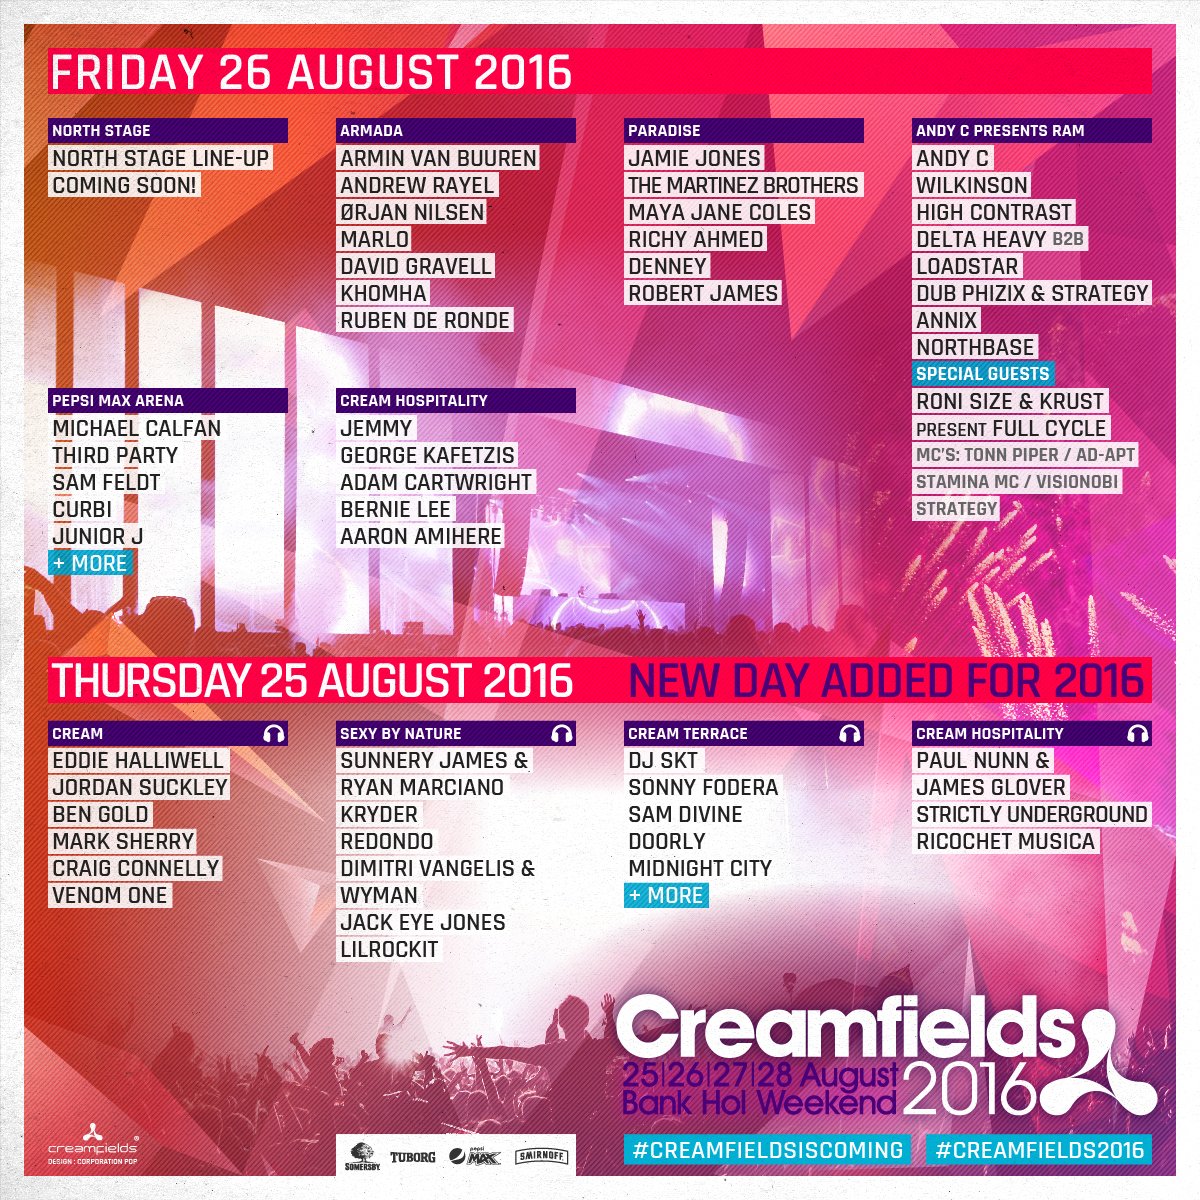 Drum Roll please...#Creamfields2016 line up has landed. #Creamfieldsiscoming creamfields.com